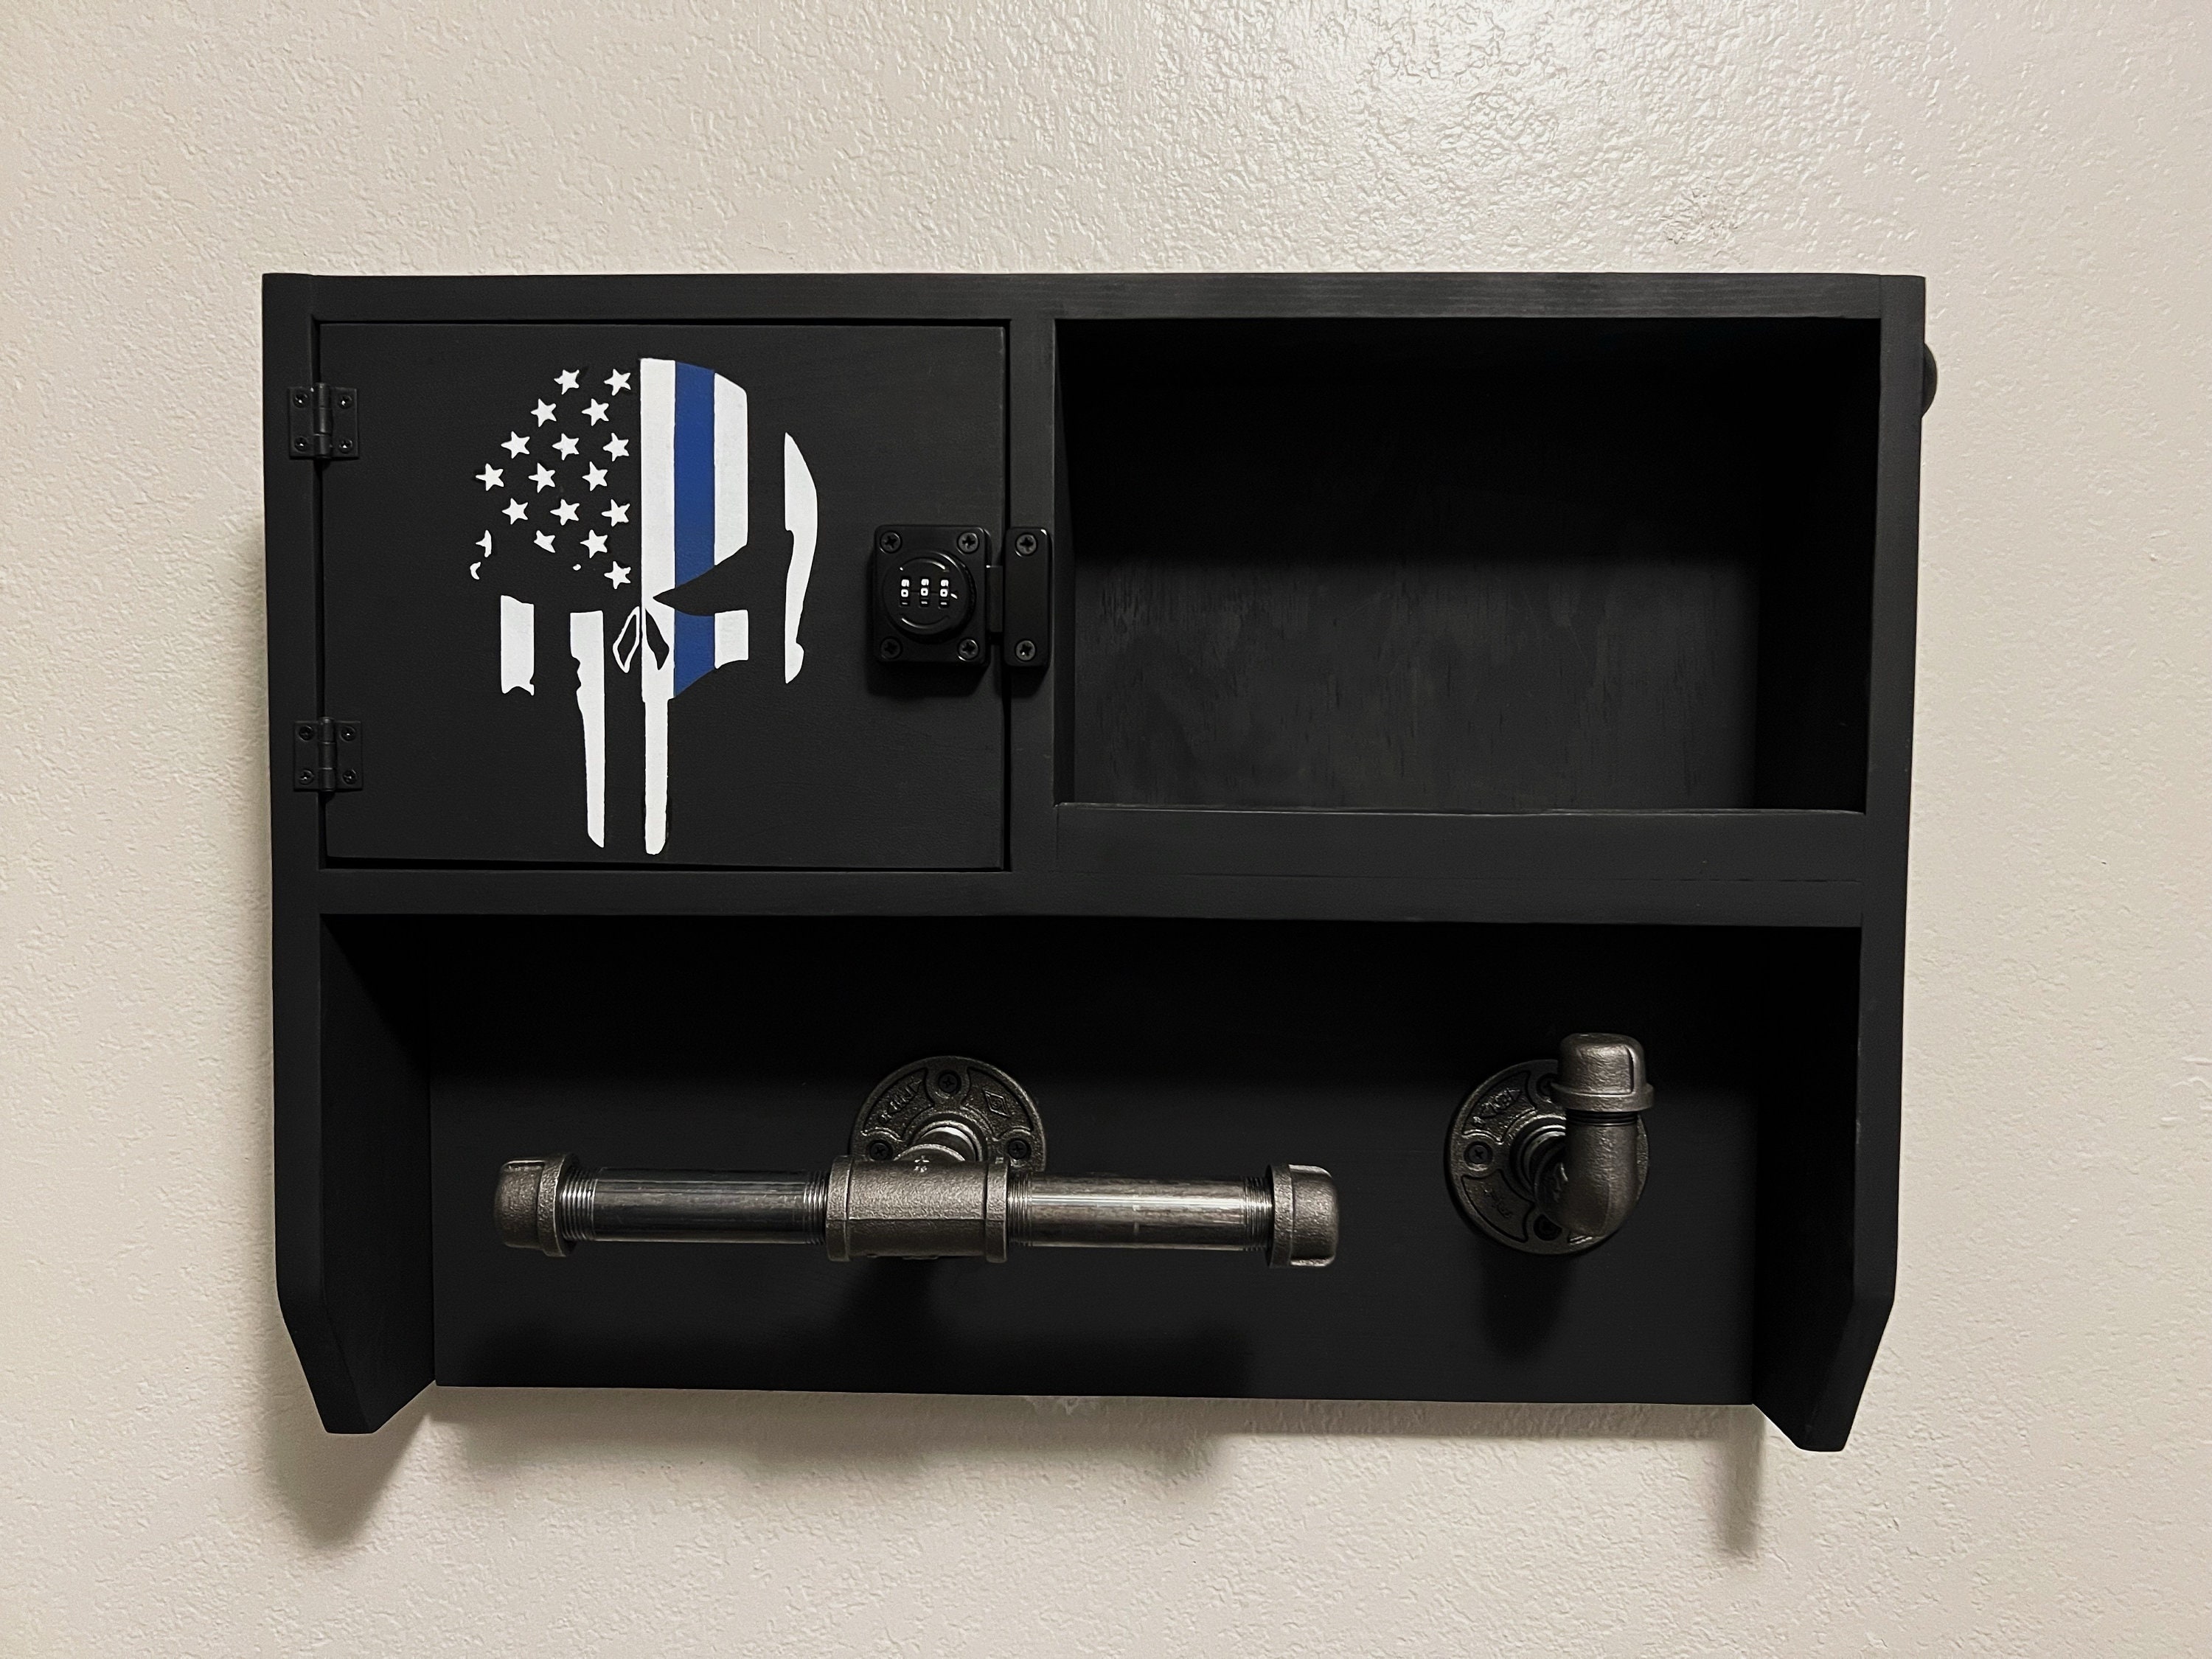 Secret Storage Shelf, Hidden Gun Storage With Personalized Key, 47 Rustic  Floating Concealment Shelf for AR15, Hidden Compartment Furniture 